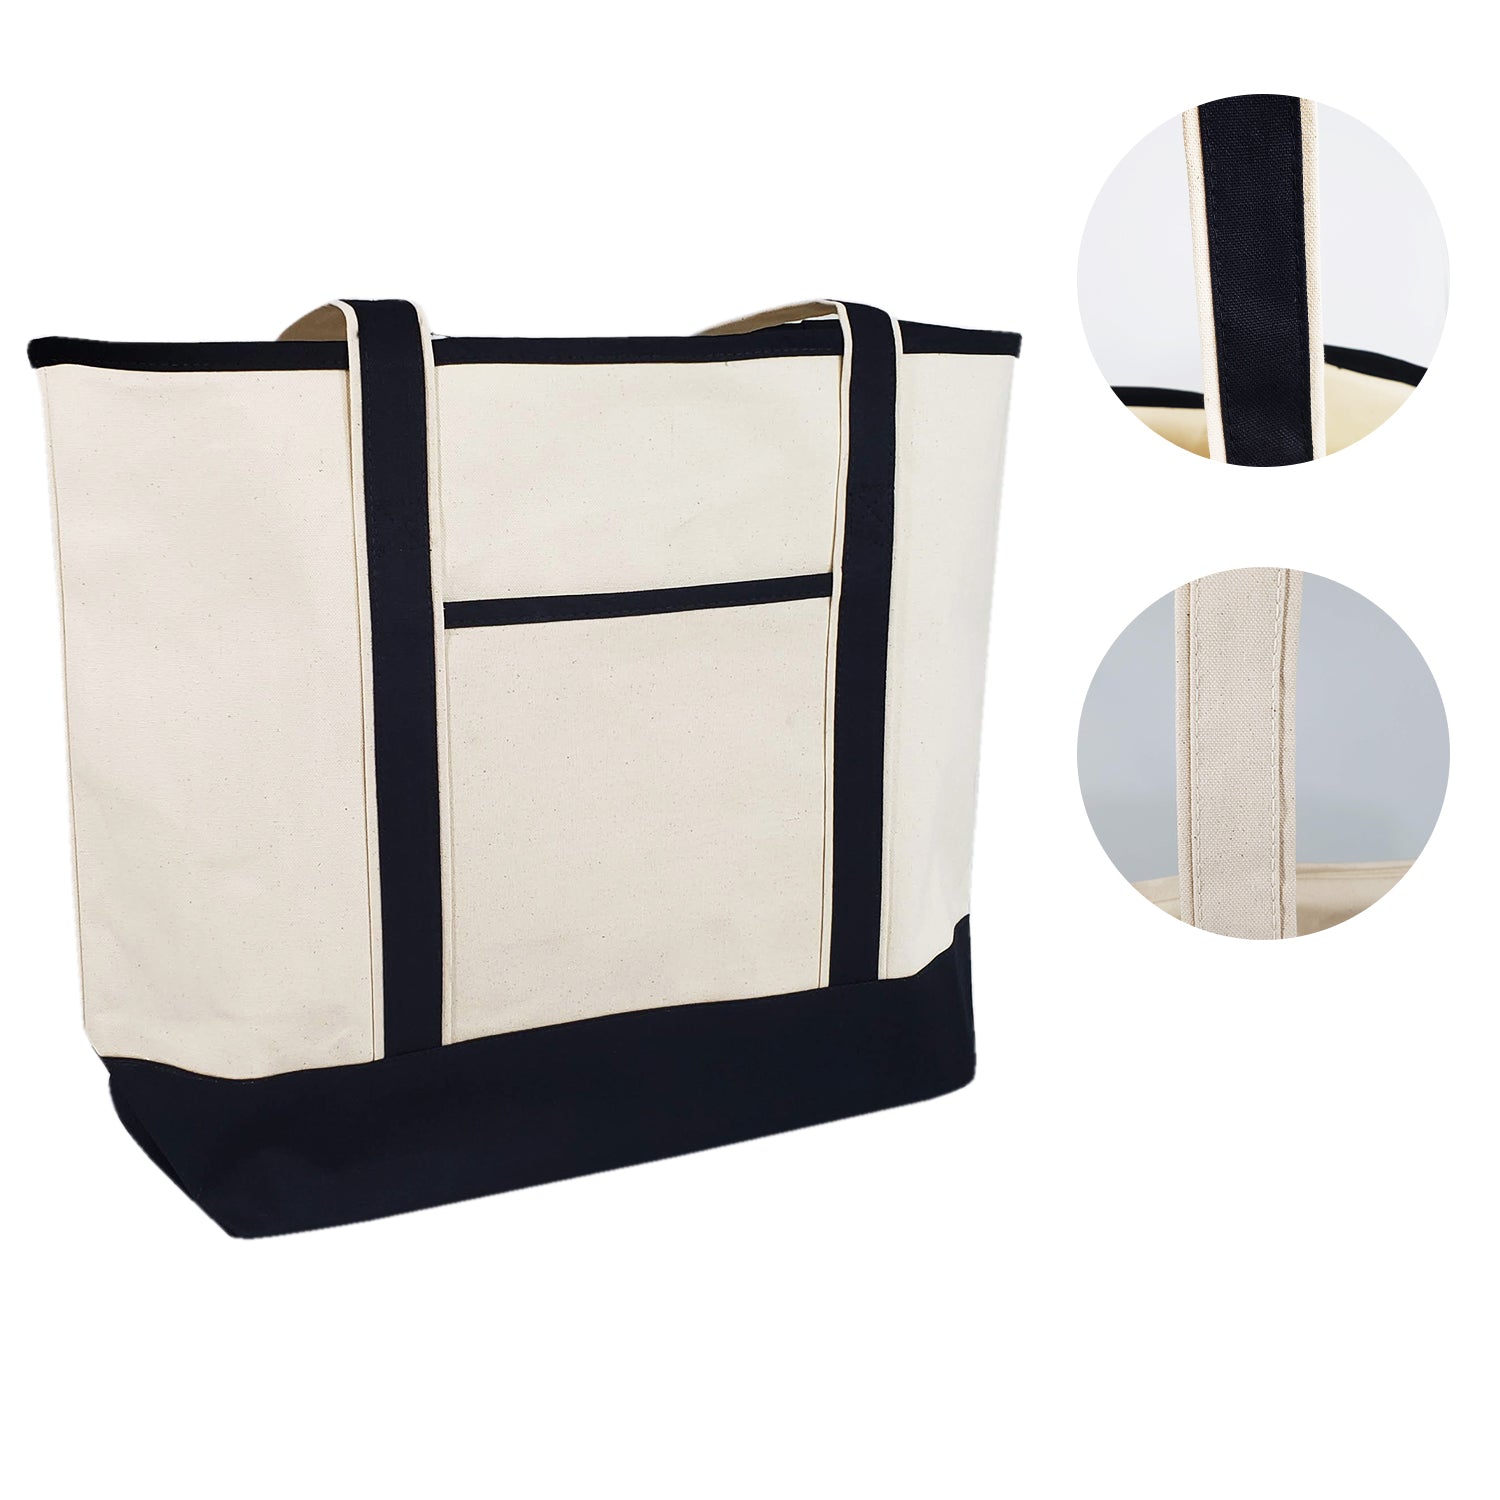 Medium Size Heavy Canvas Deluxe Tote Bag, Canvas Beach Bags